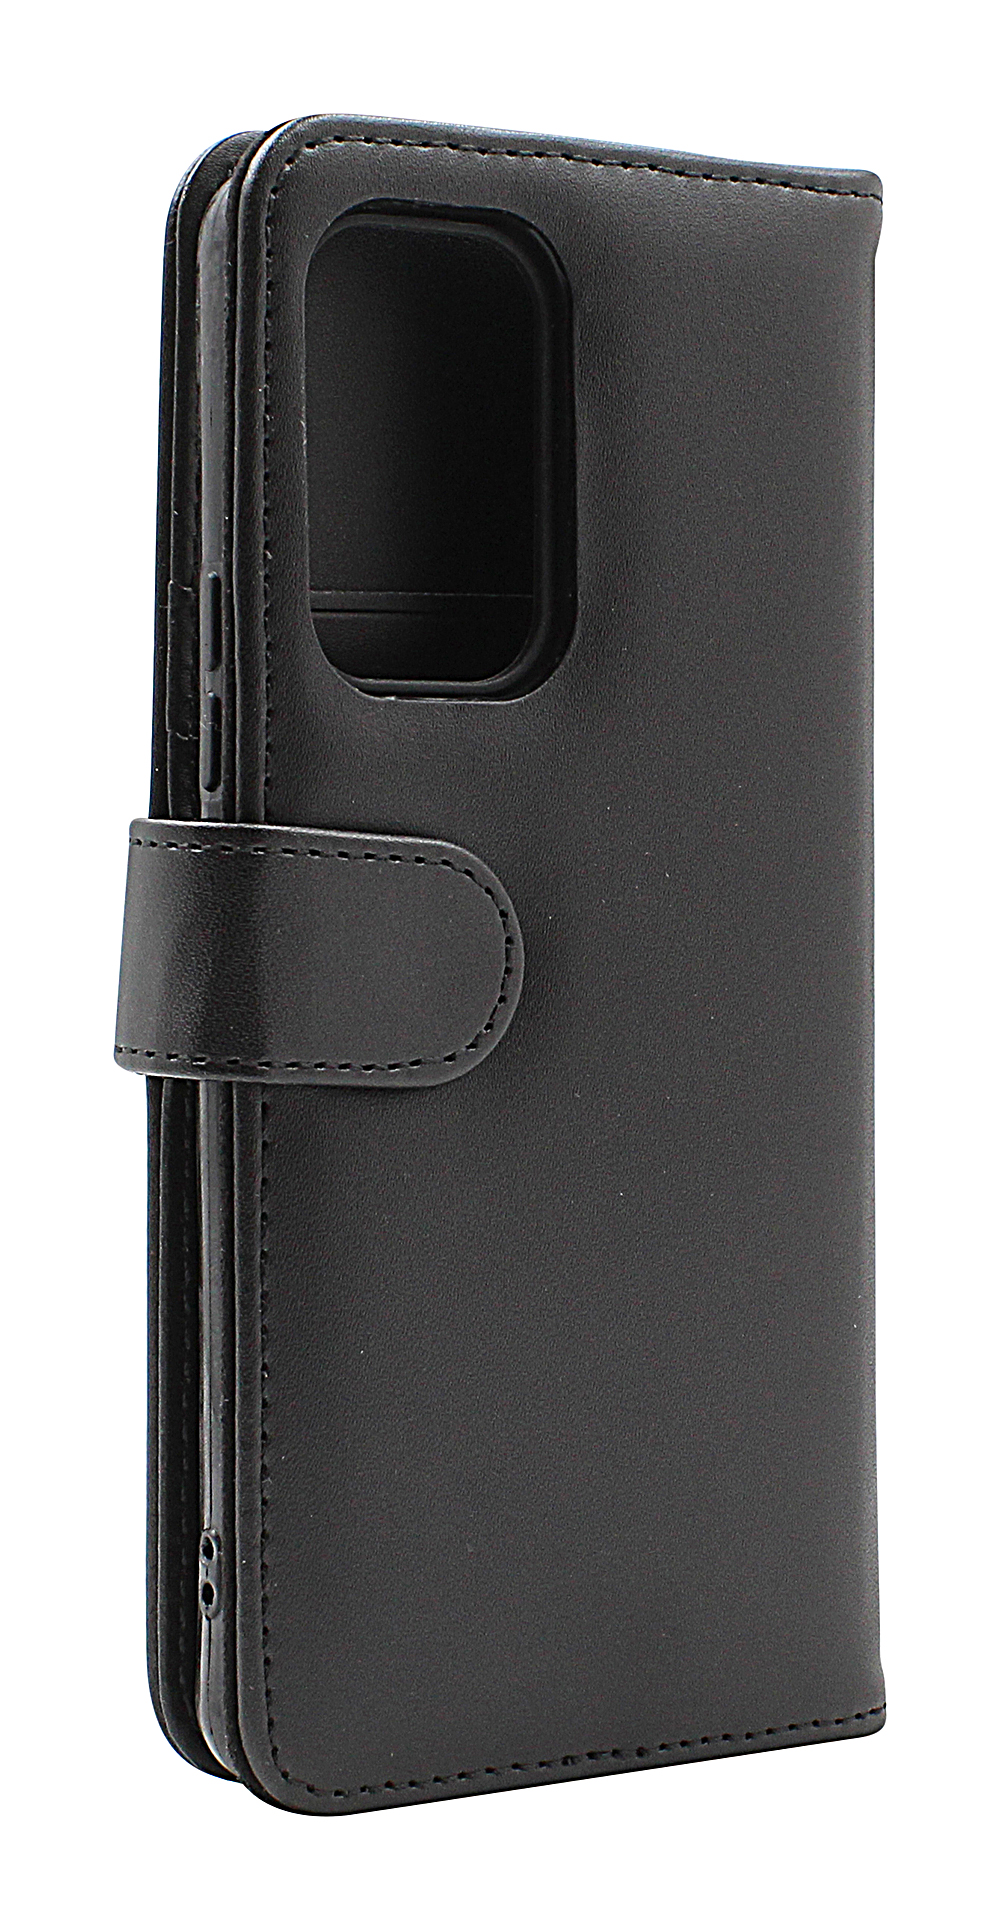 CoverInSkimblocker Plnboksfodral Samsung Galaxy A53 5G (A536B)